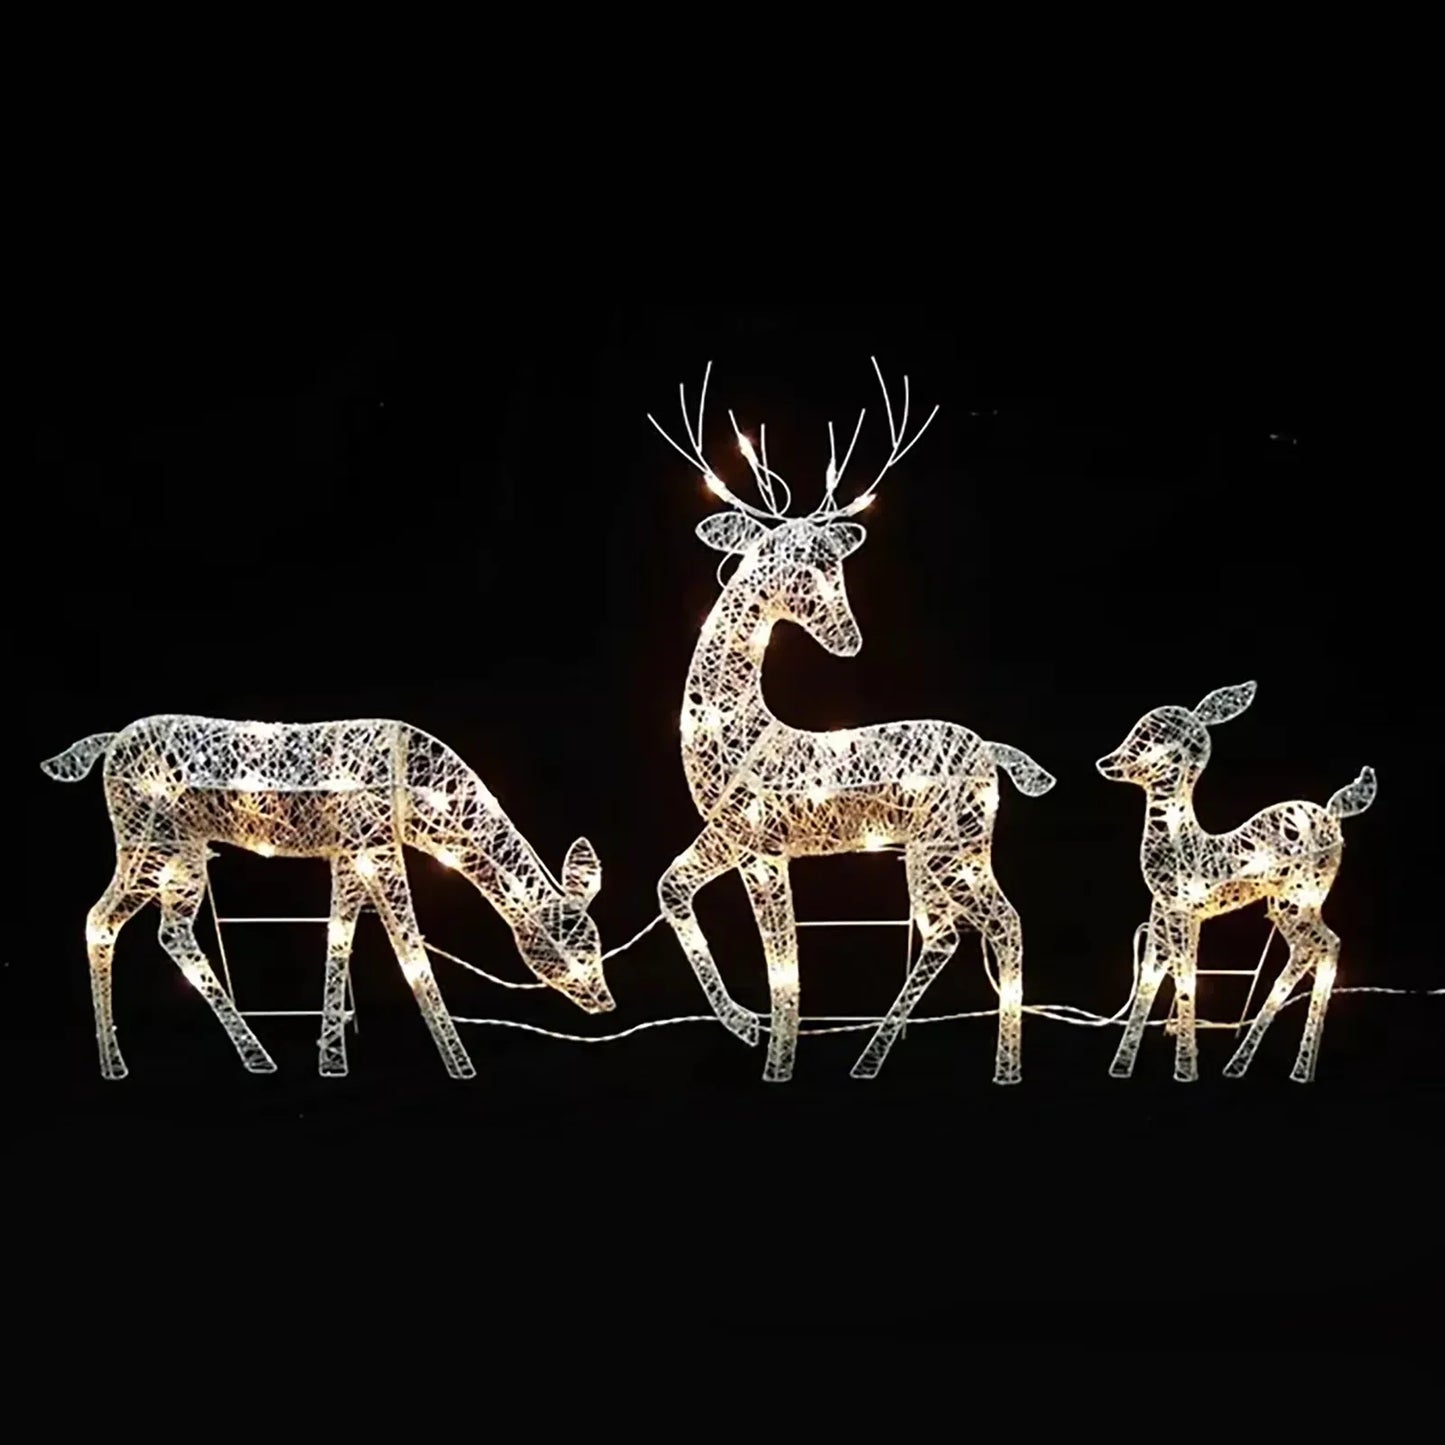 Lighted Deer Christmas Decor With Led Lights